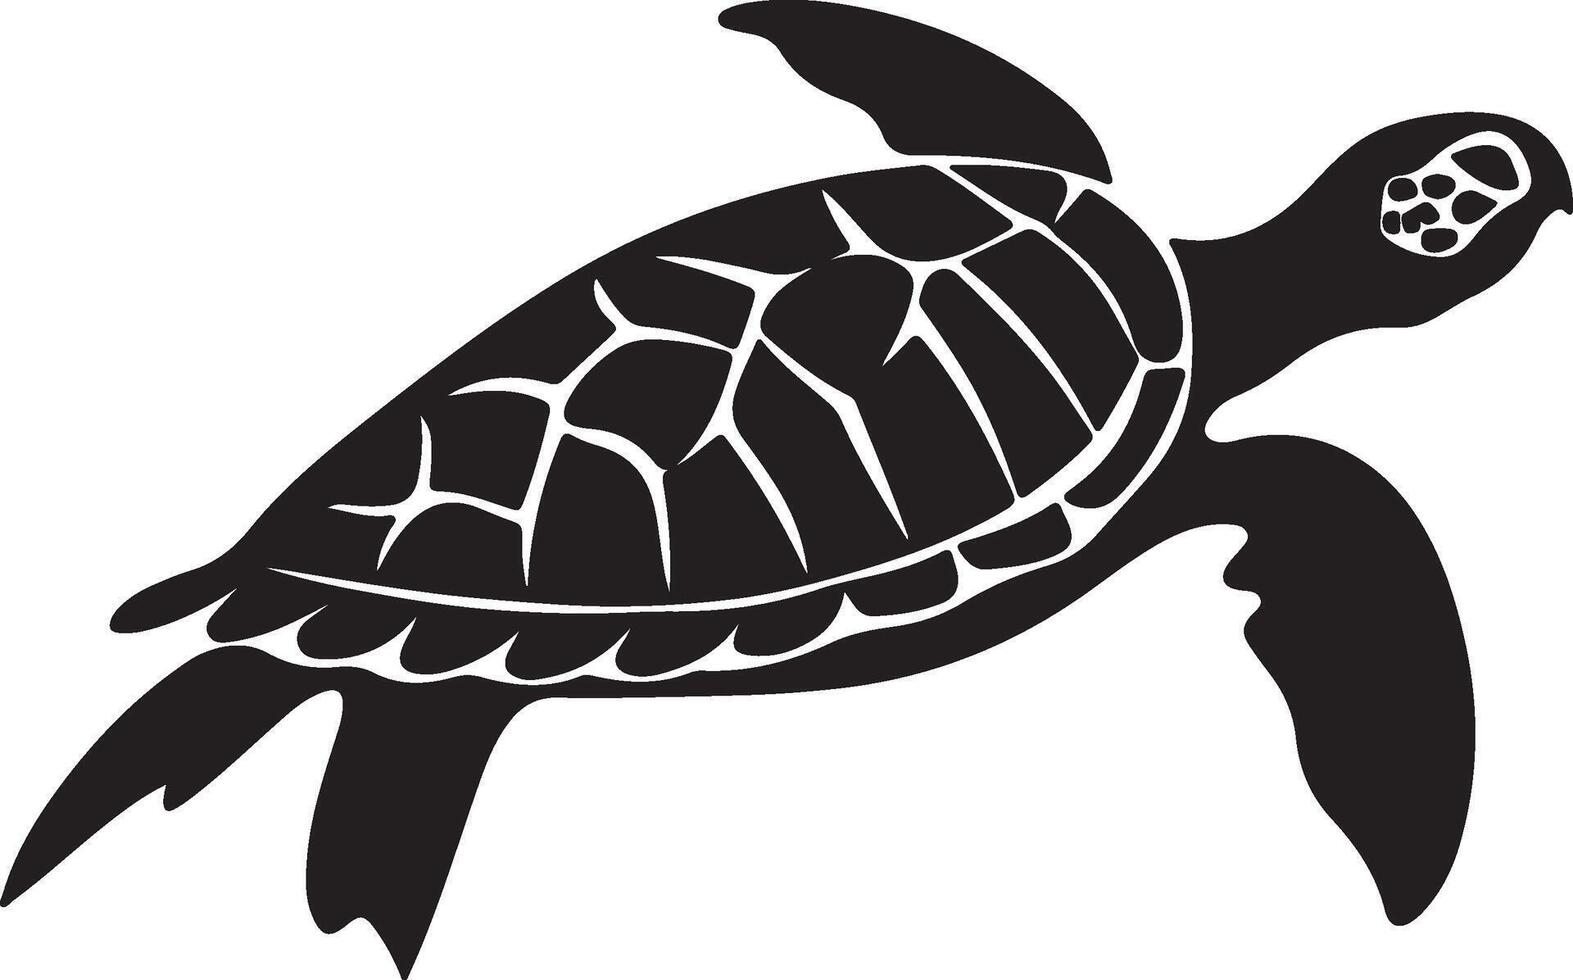 Turtle Silhouette Vector Illustration White Background